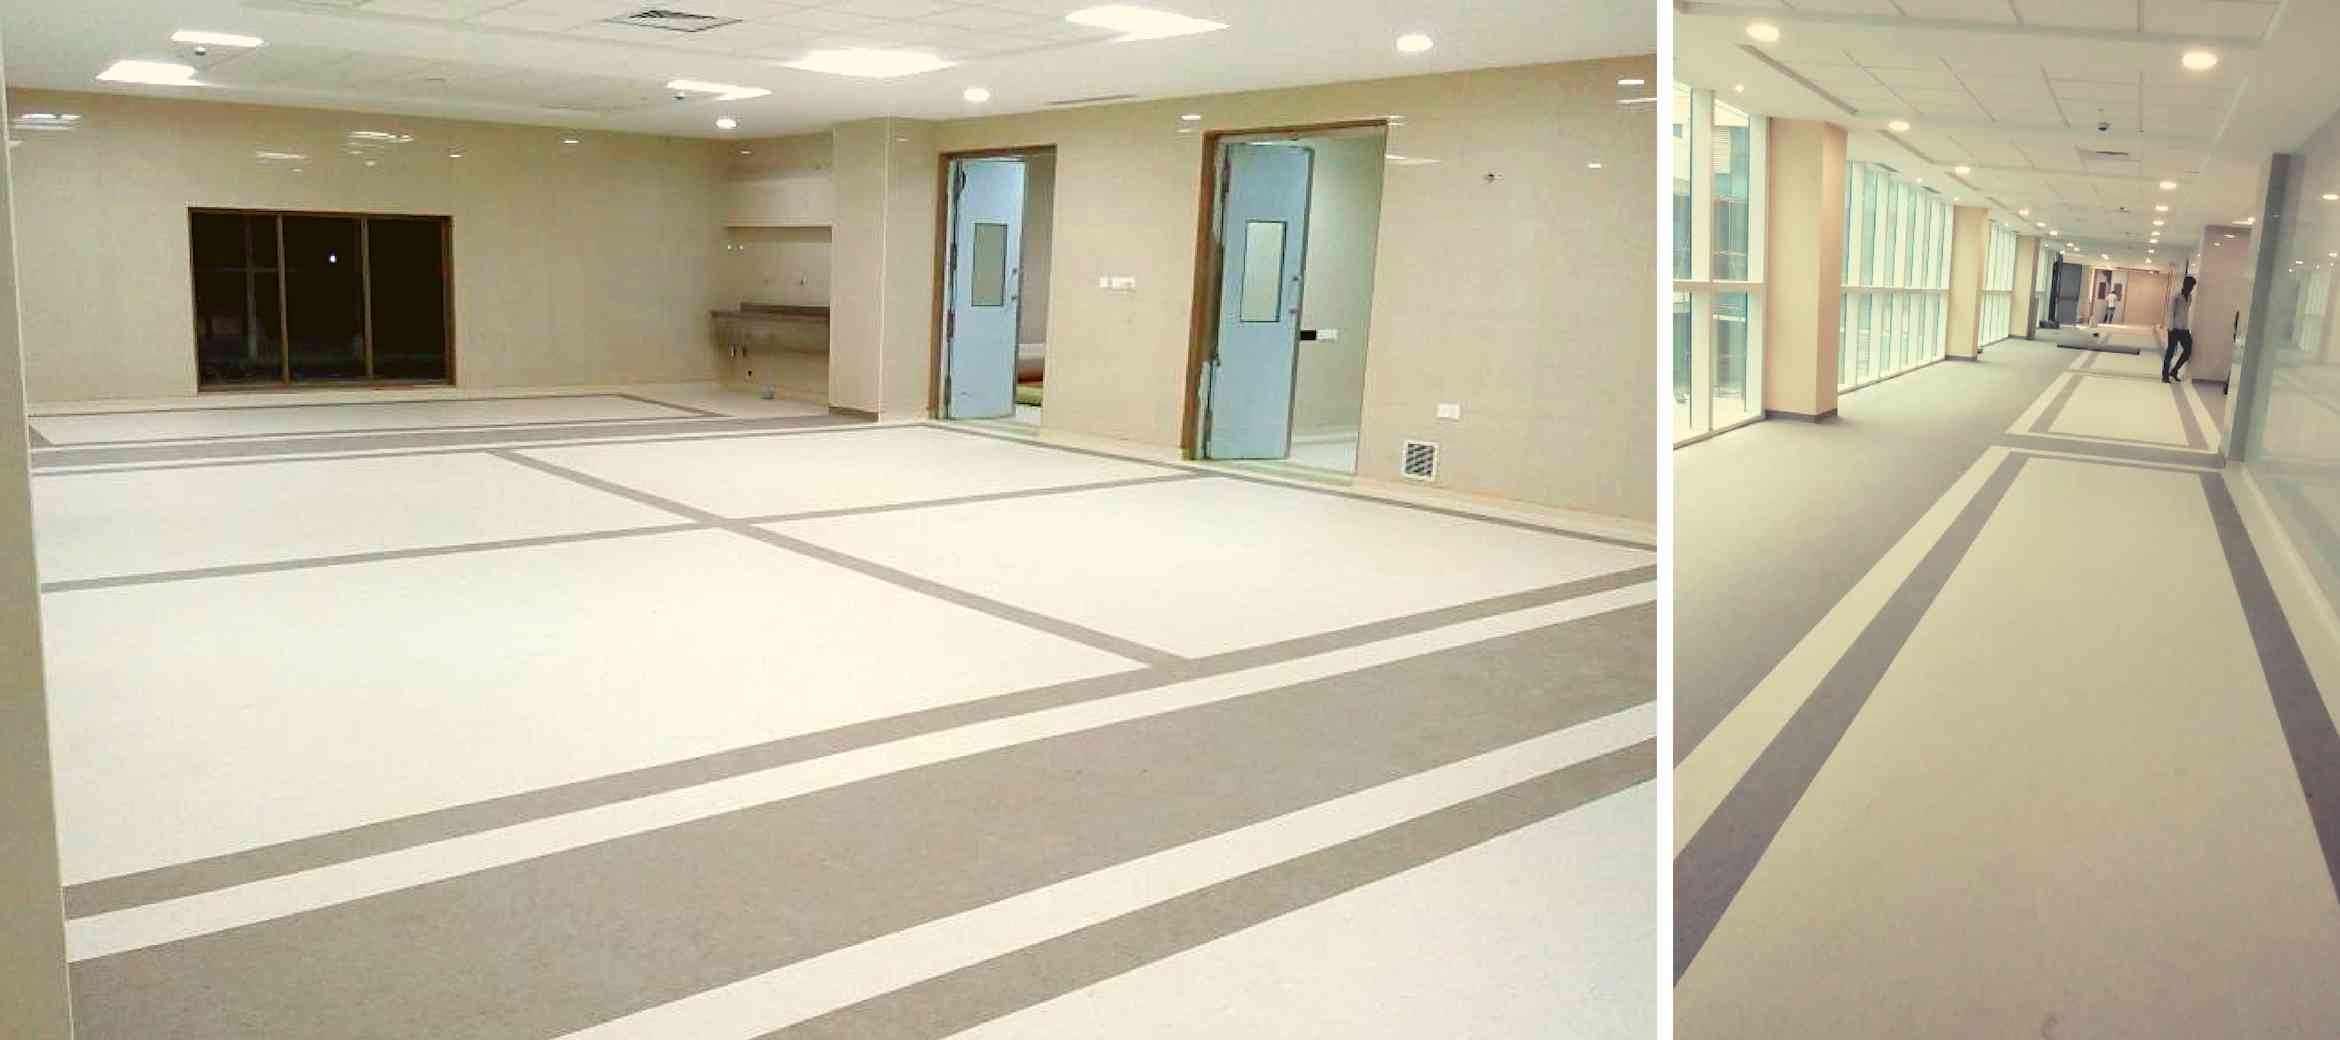 Cheap vinyl flooring, Arving eye Hospital chennai flooring by indiana flooring